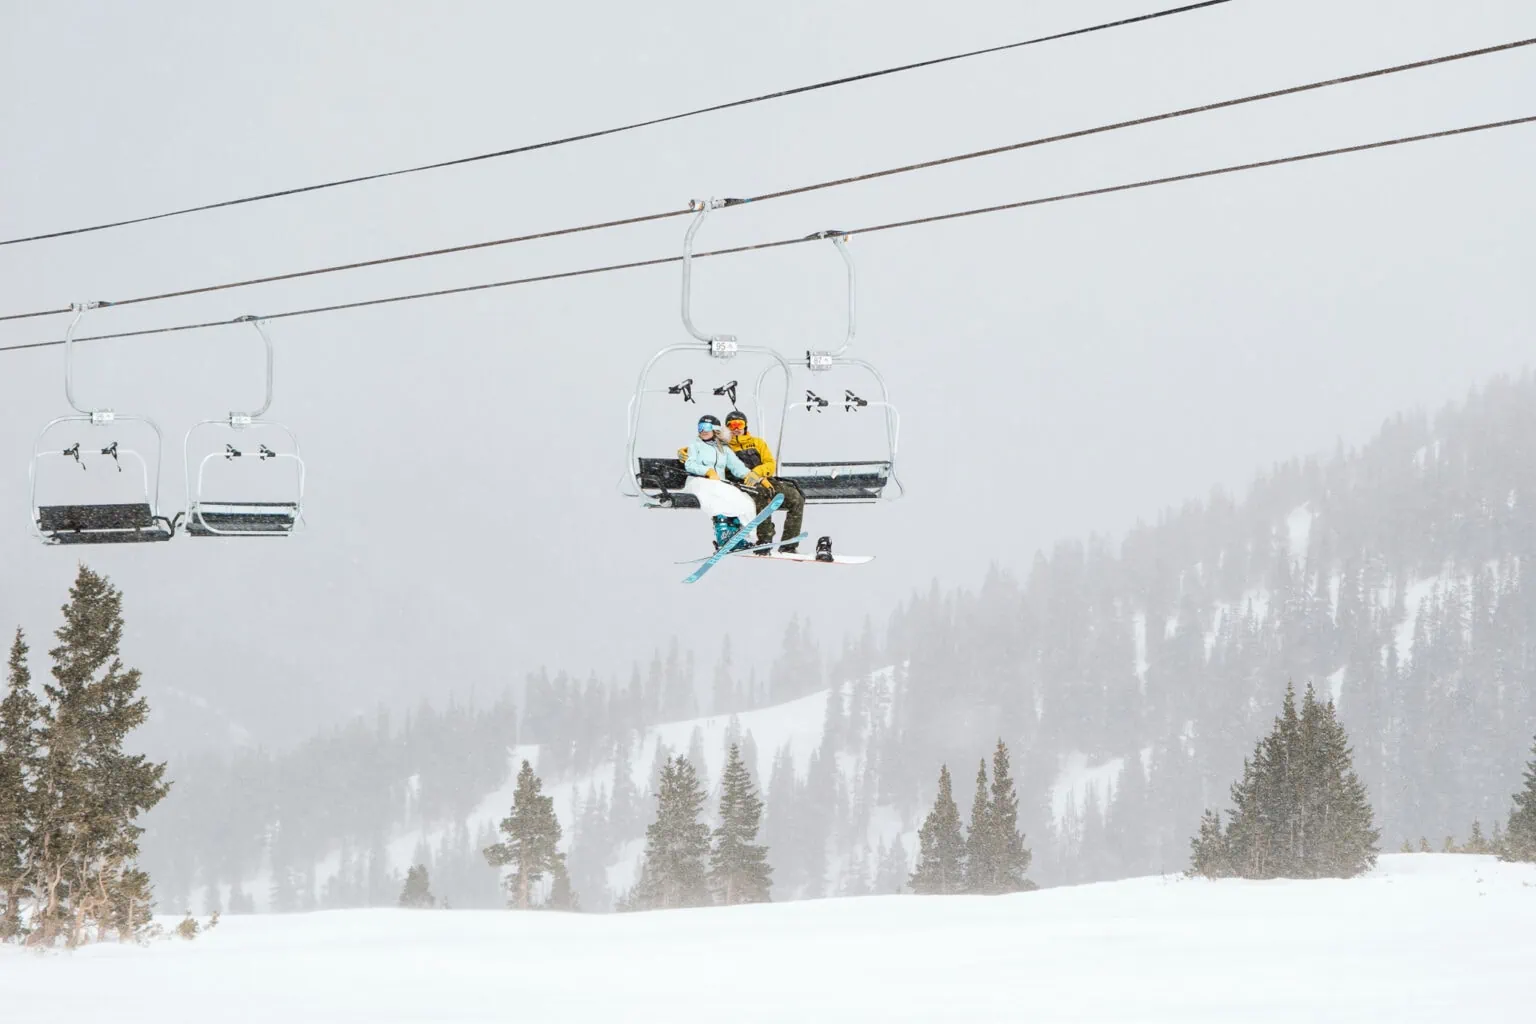 Snowboarding elopement at Loveland Ski Area in Colorado